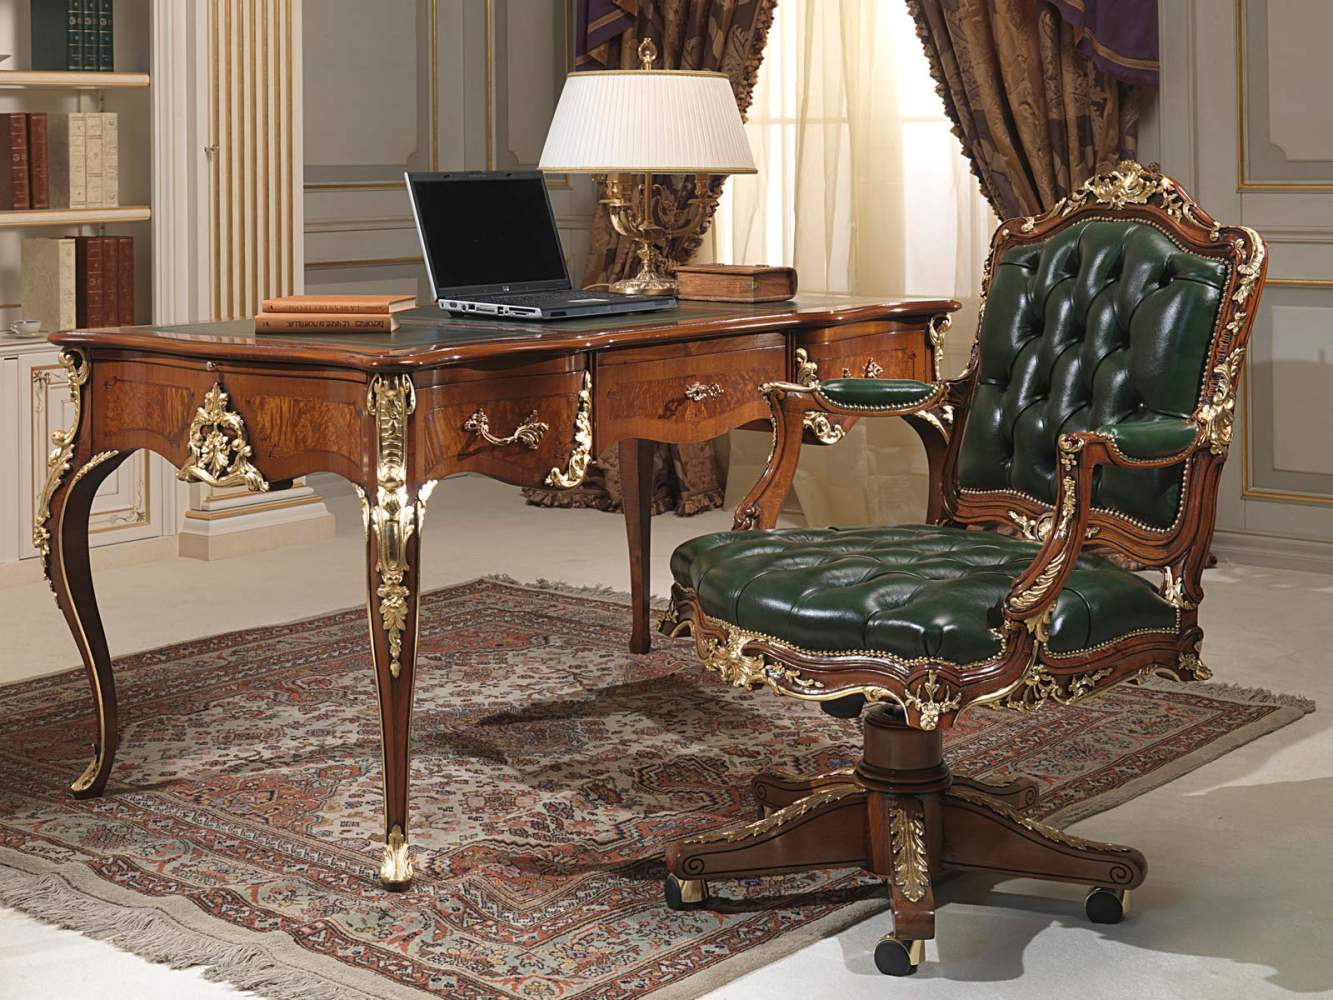 Office classique style Louis XV